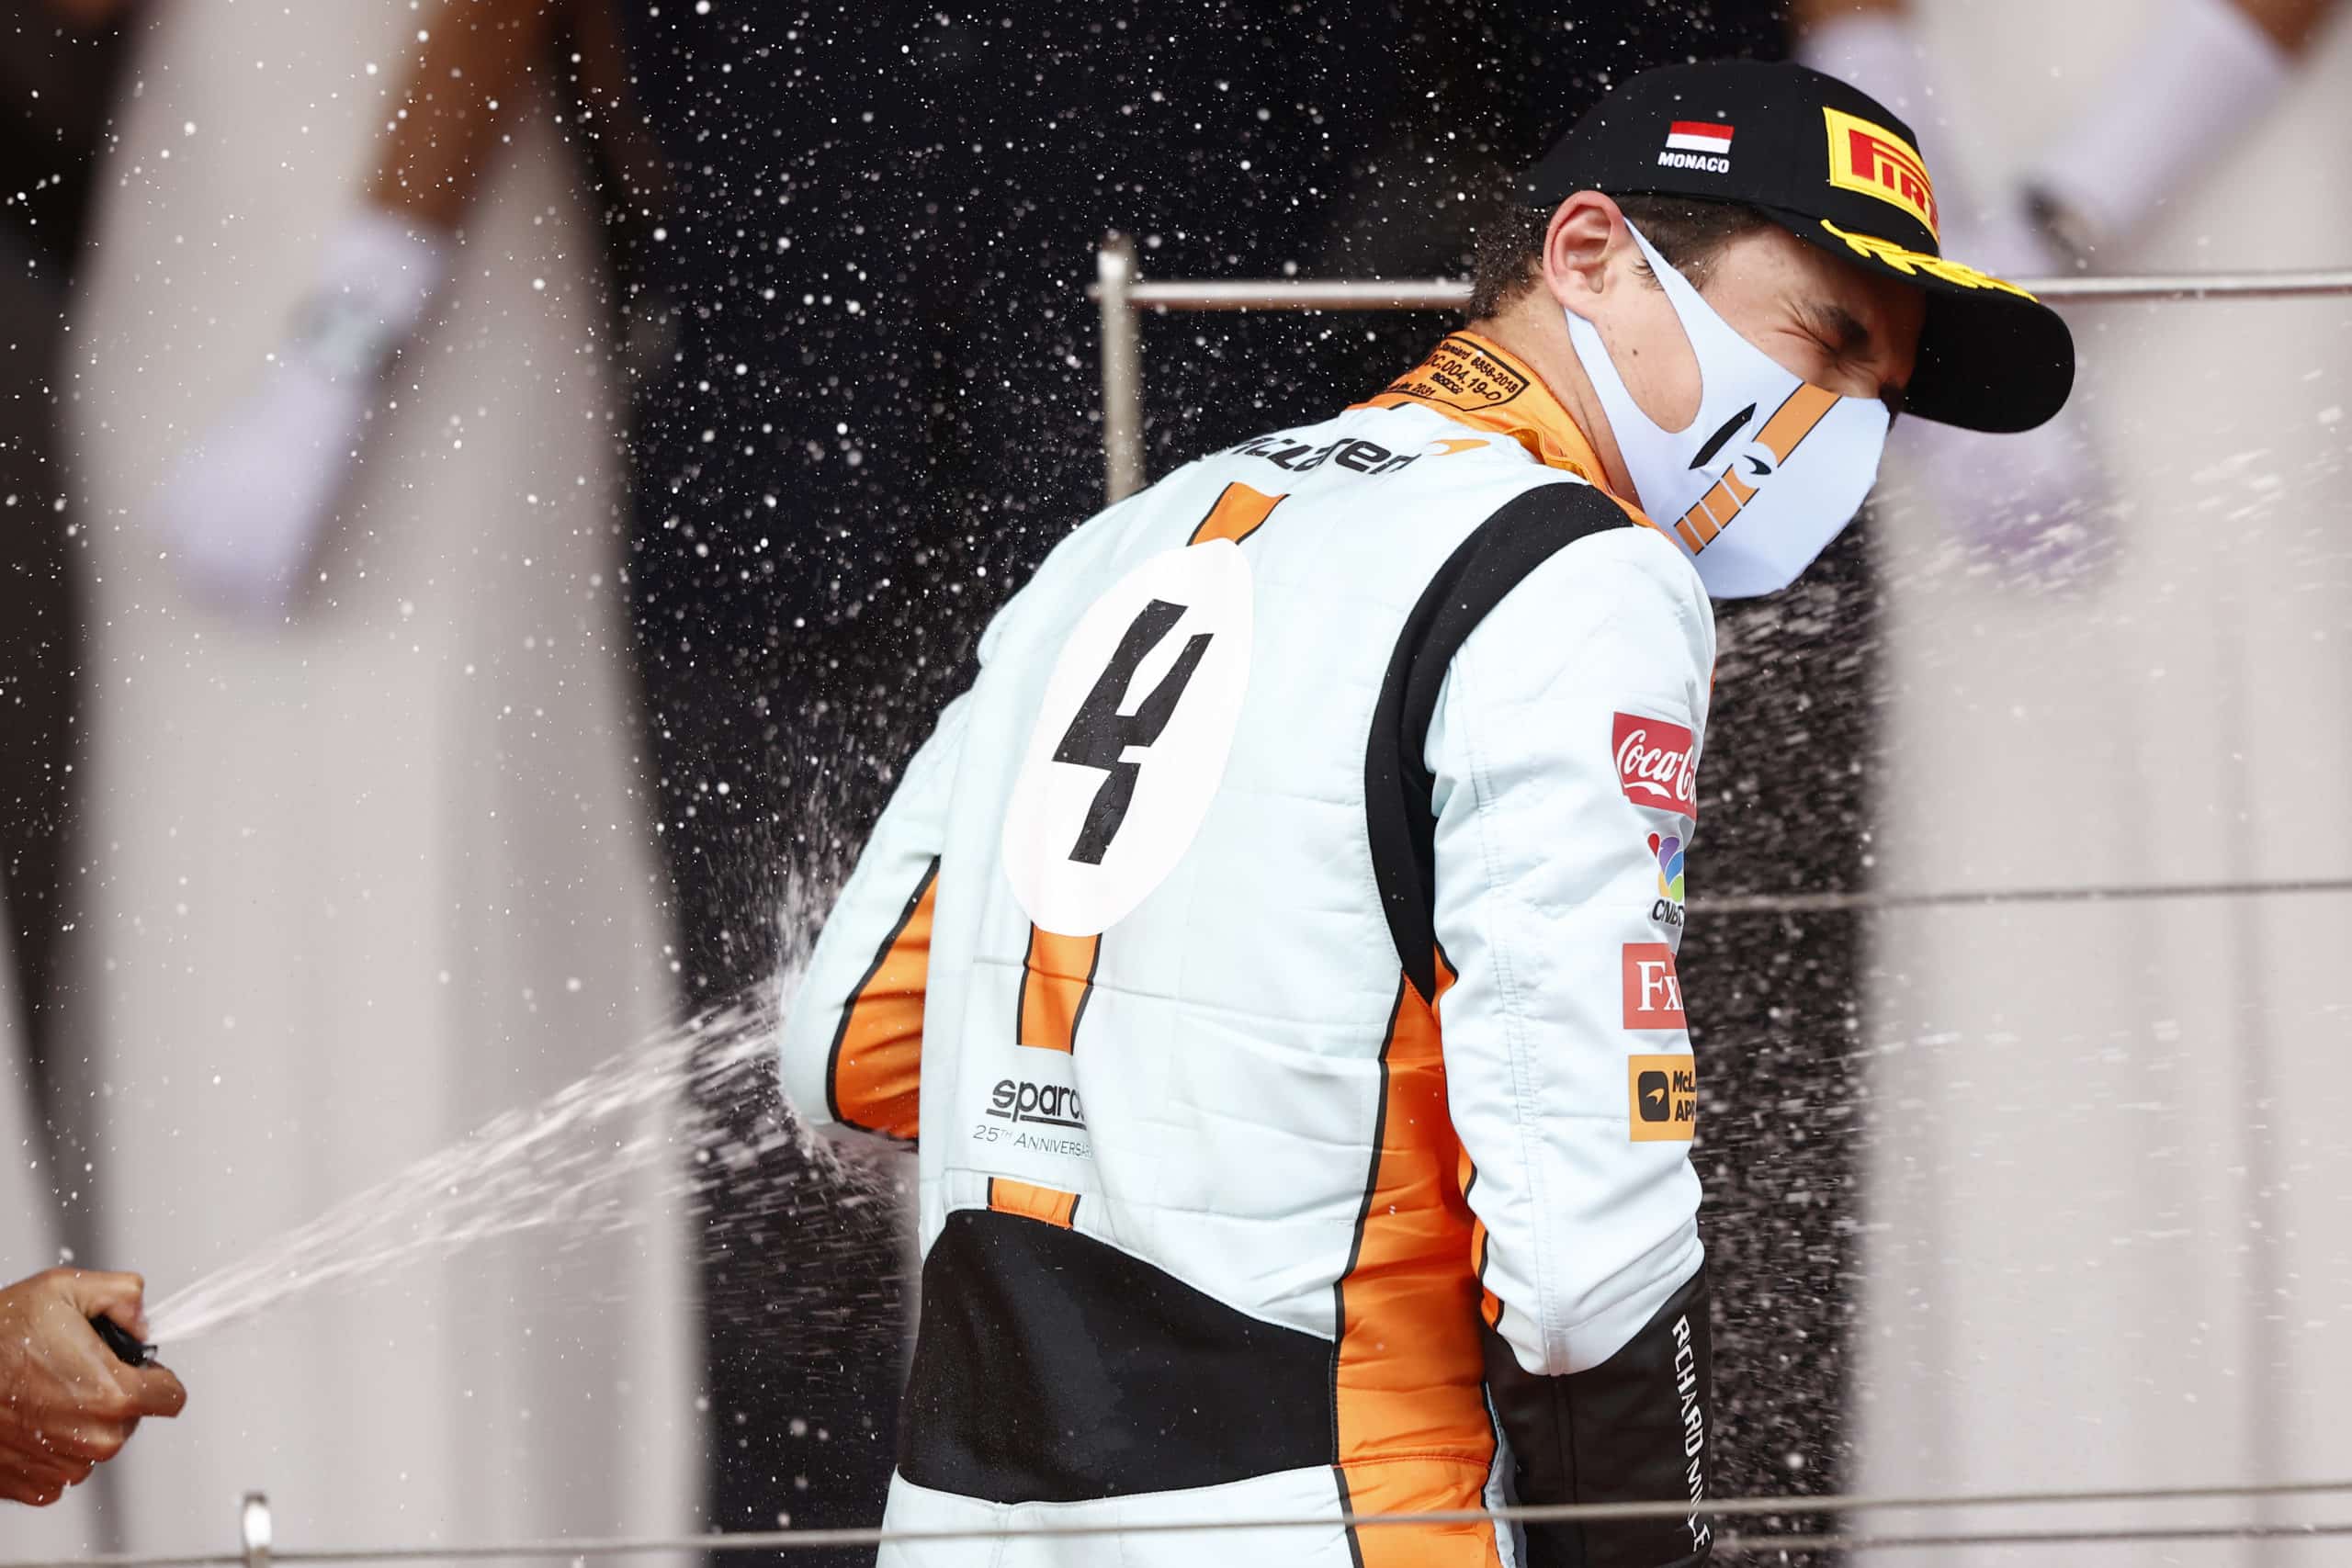 2021 Monaco Grand Prix, Sunday - Lando Norris (image courtesy McLaren)